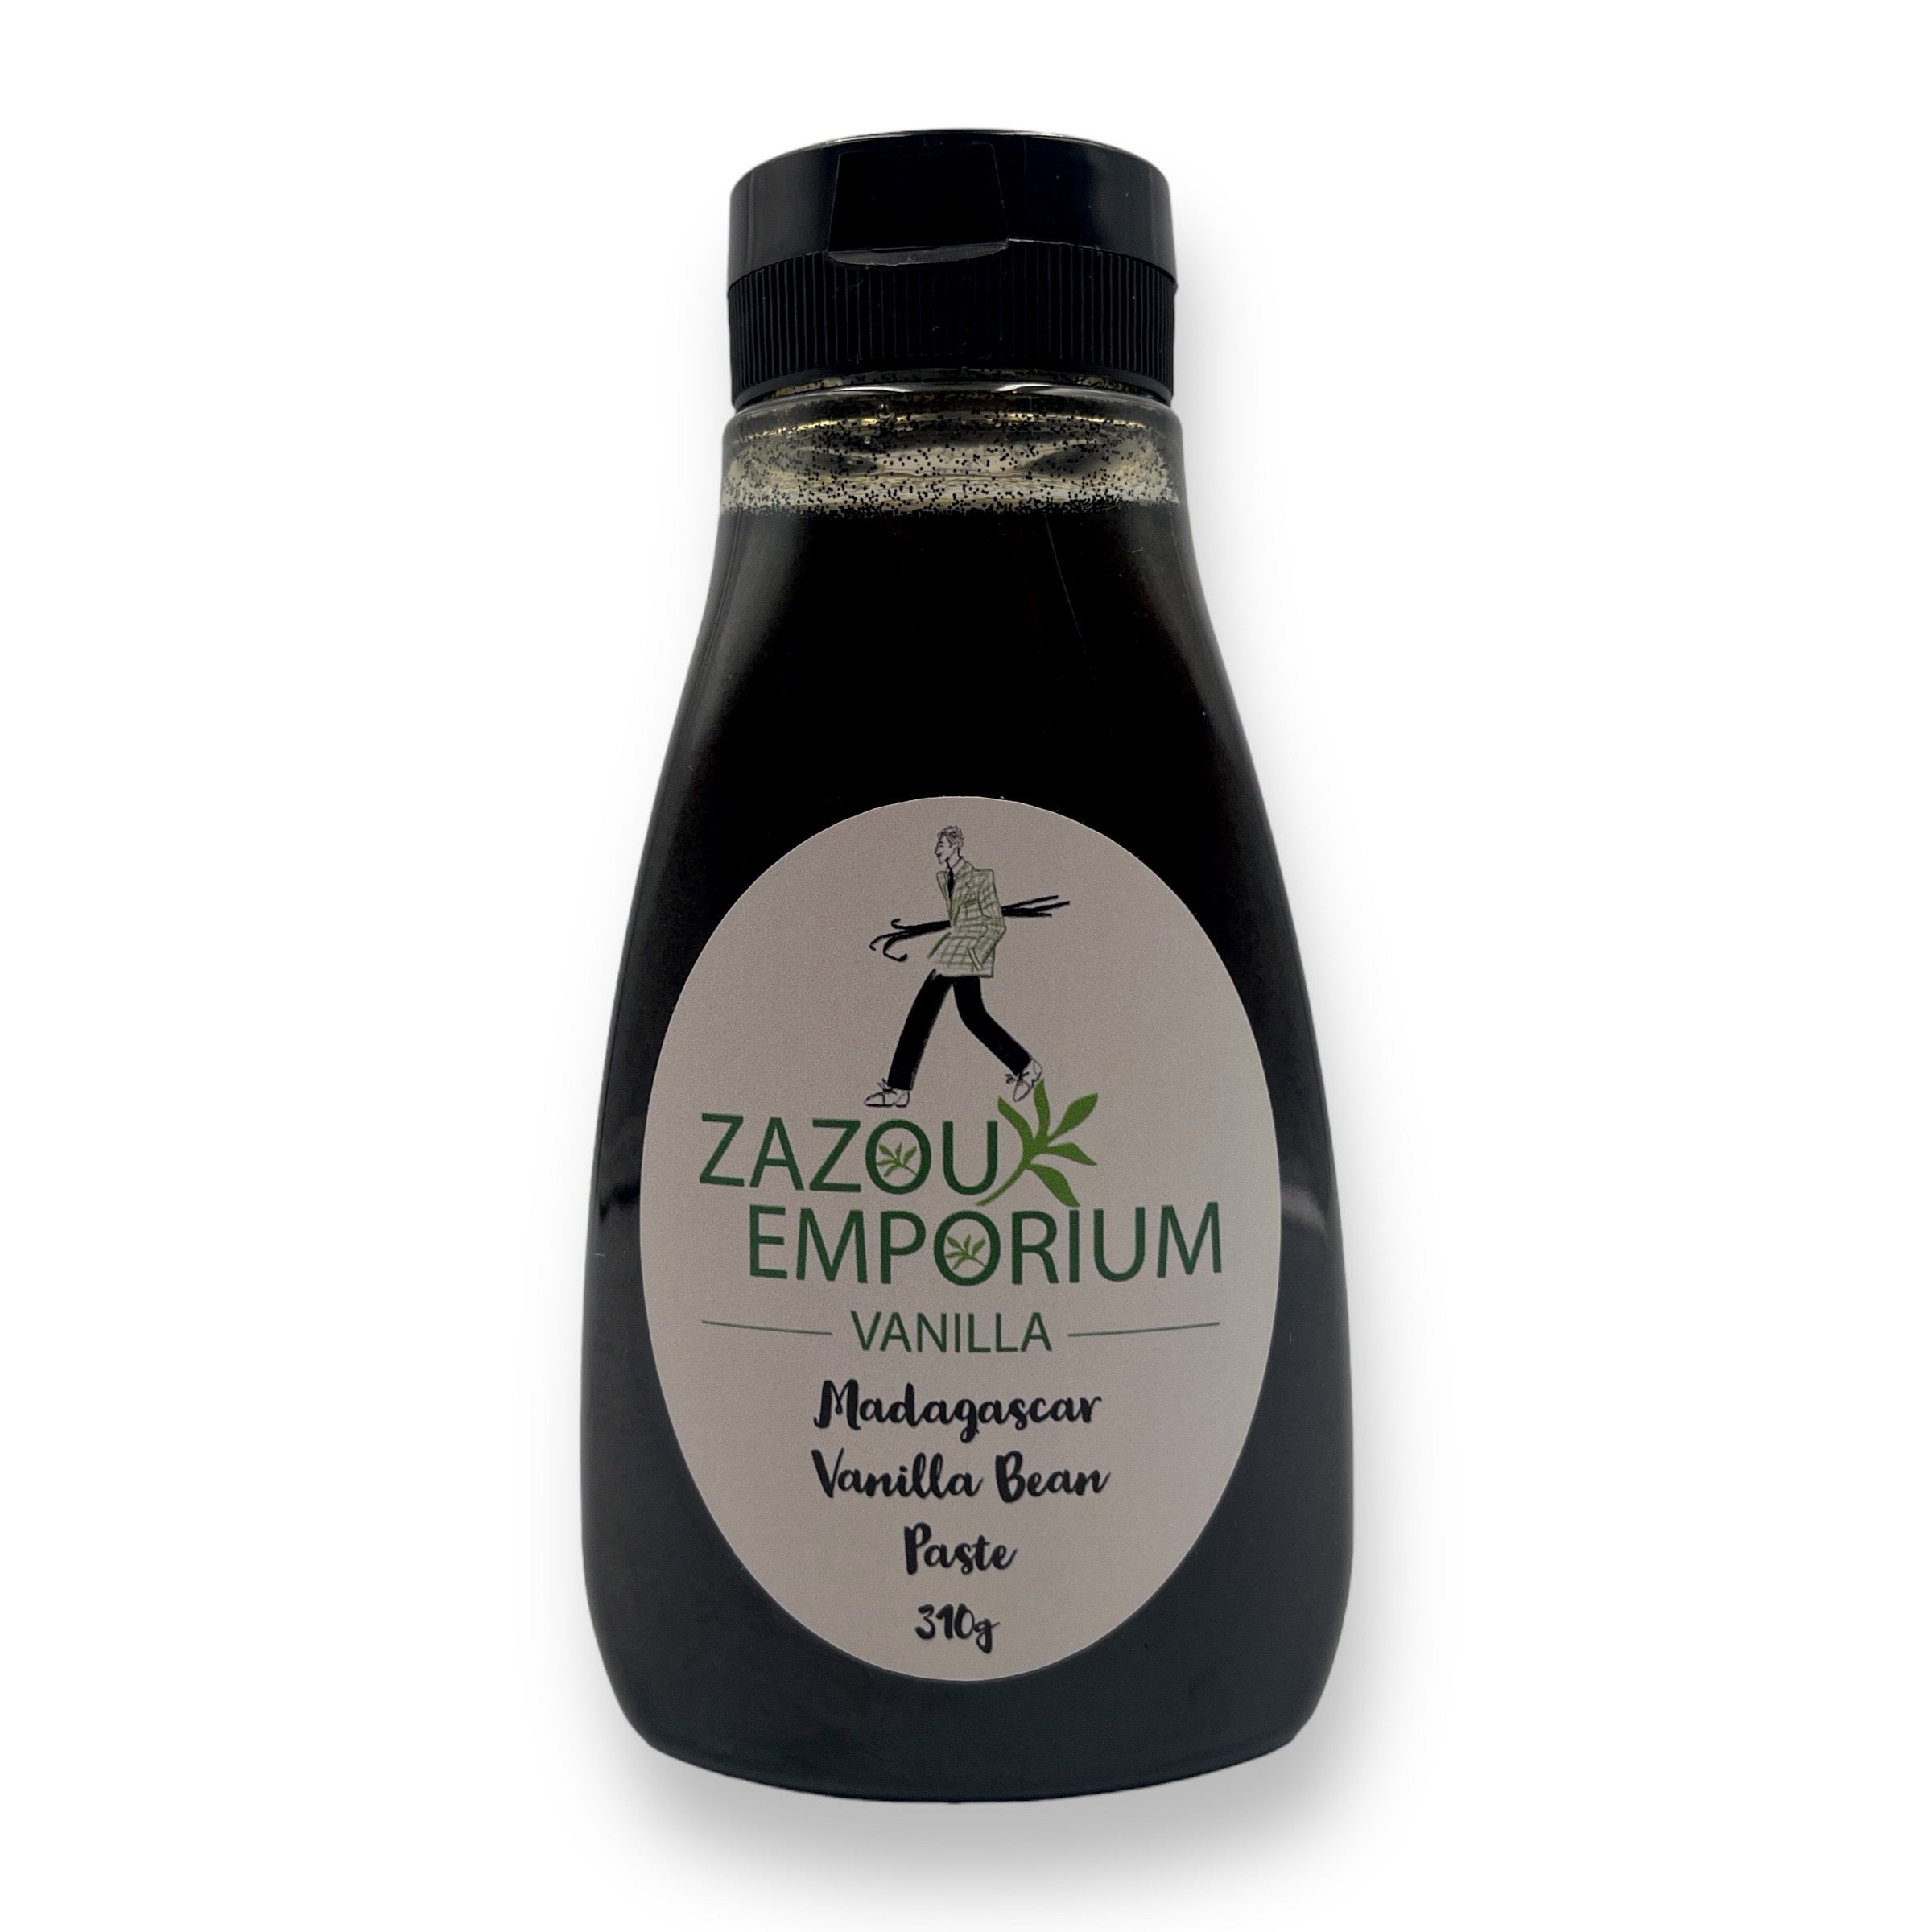 Zazou Emporium Vanilla Bean Paste 310g